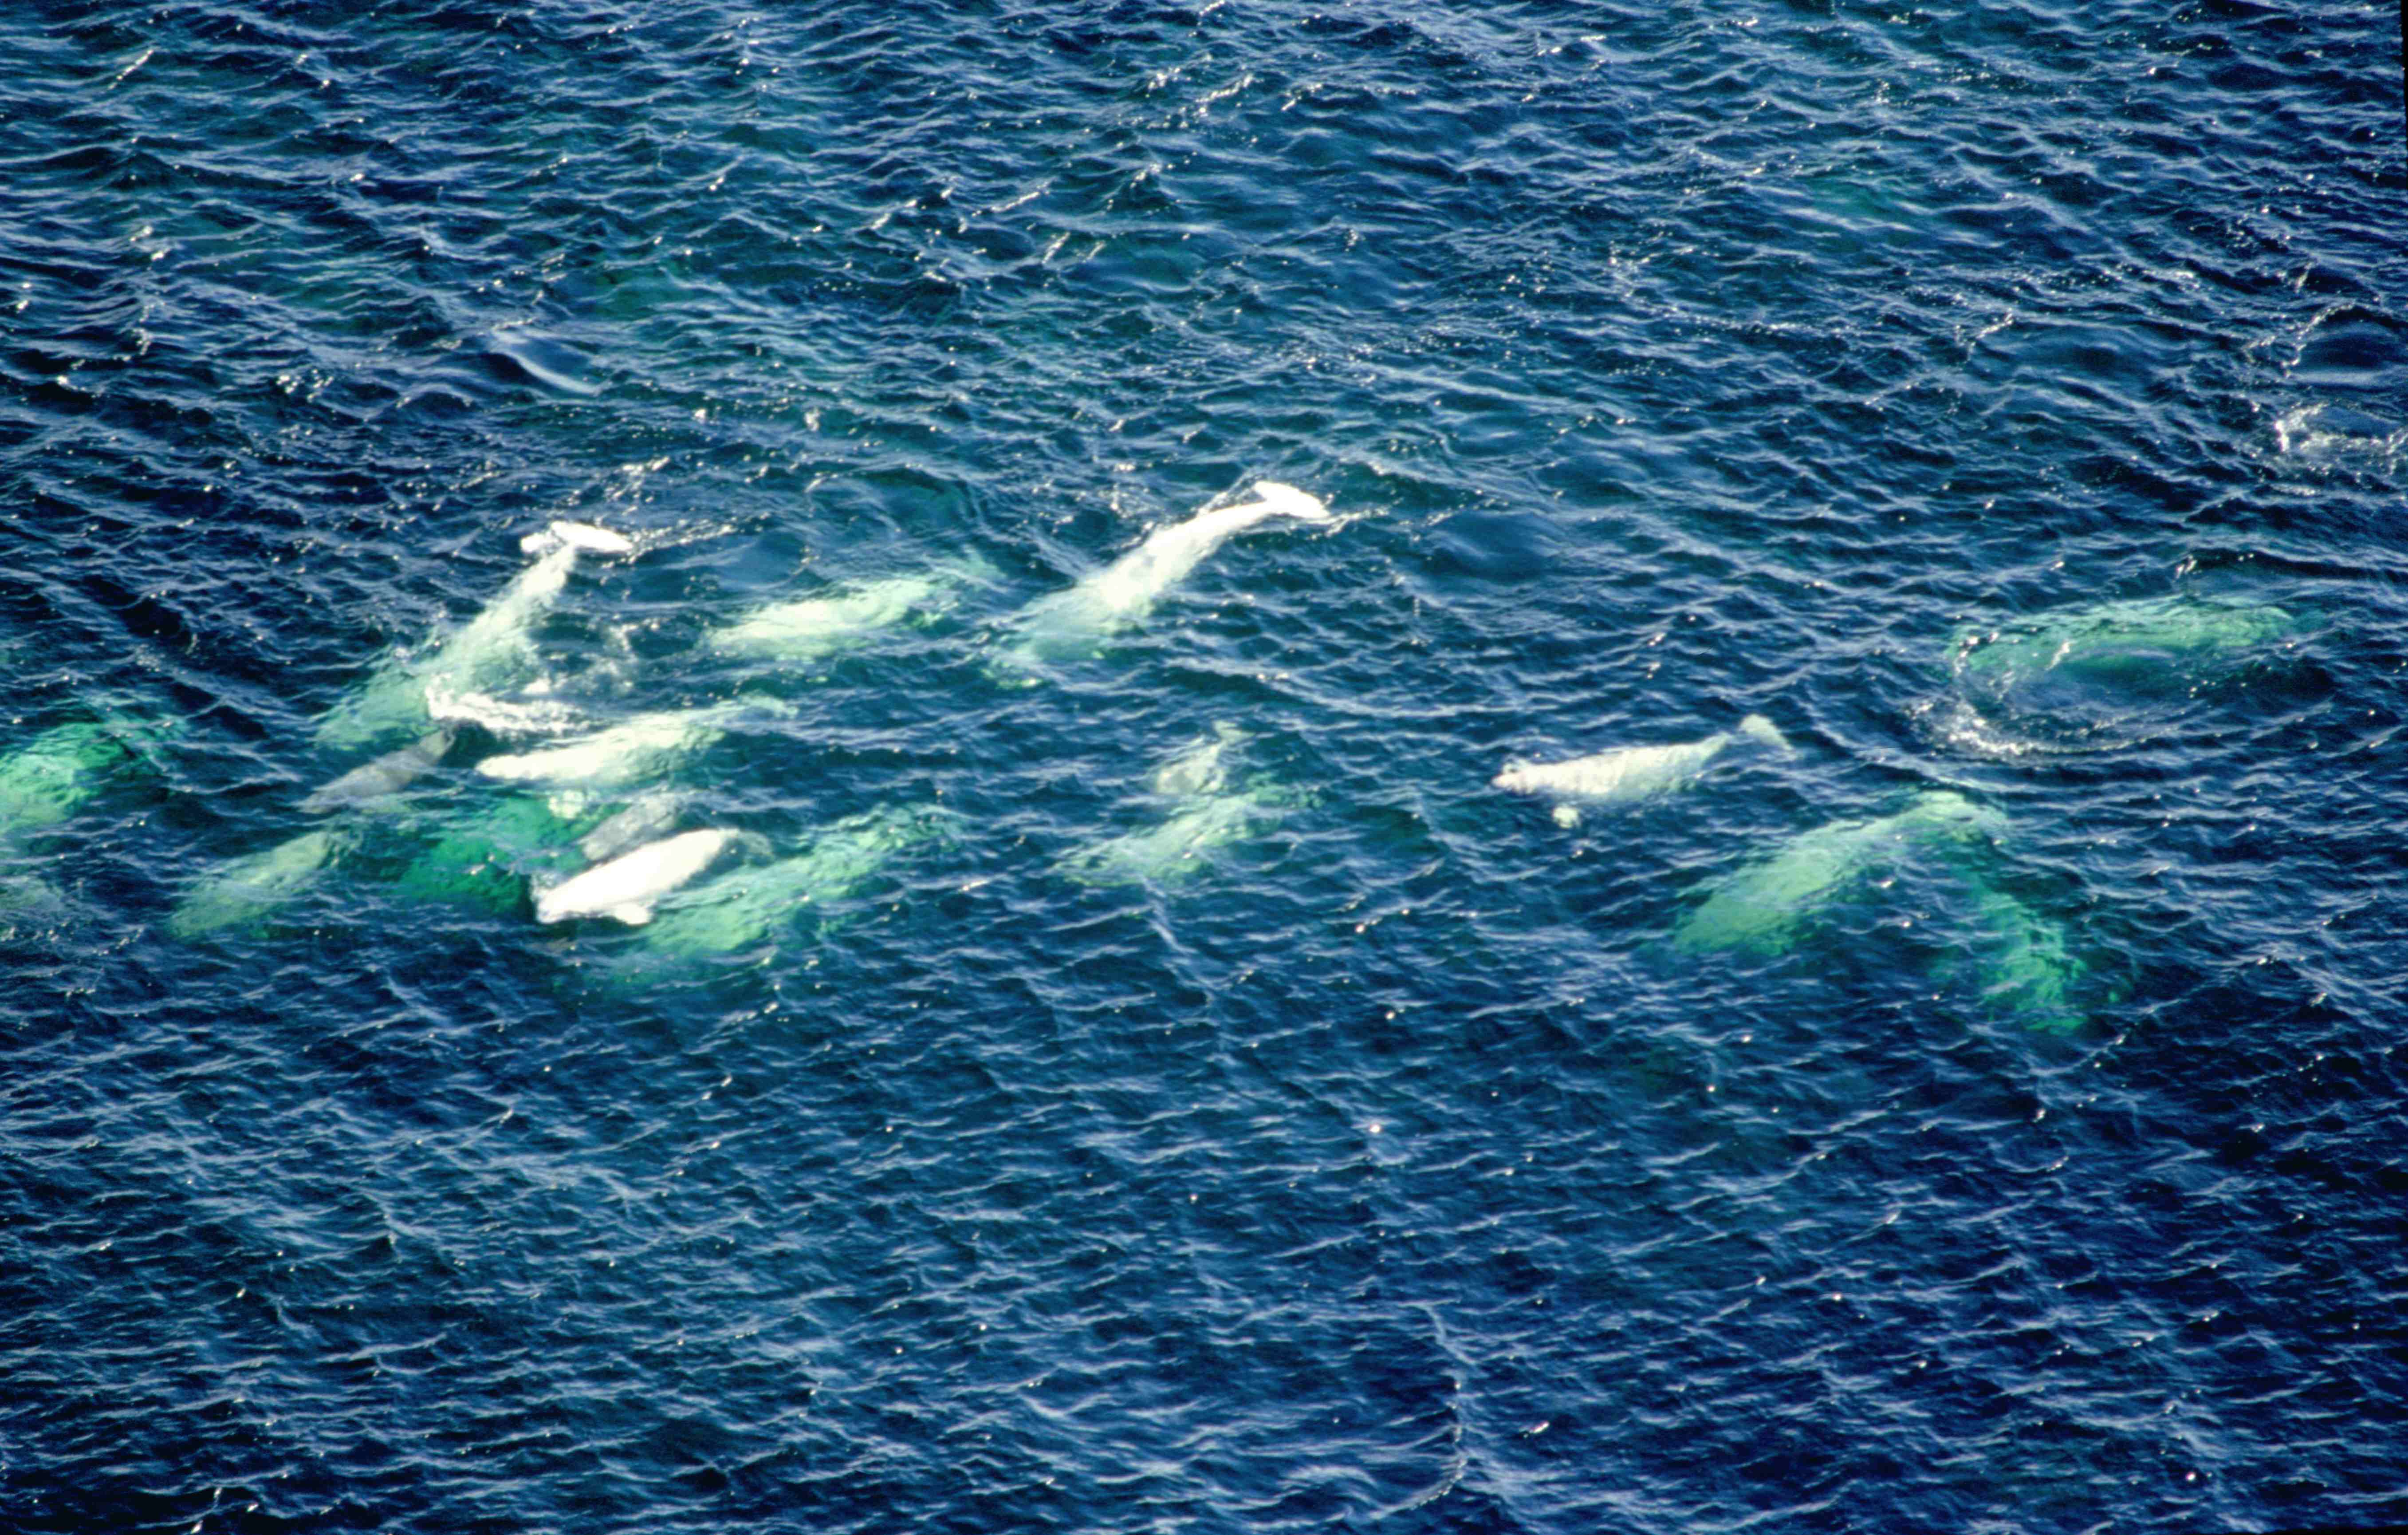 Beluga migration